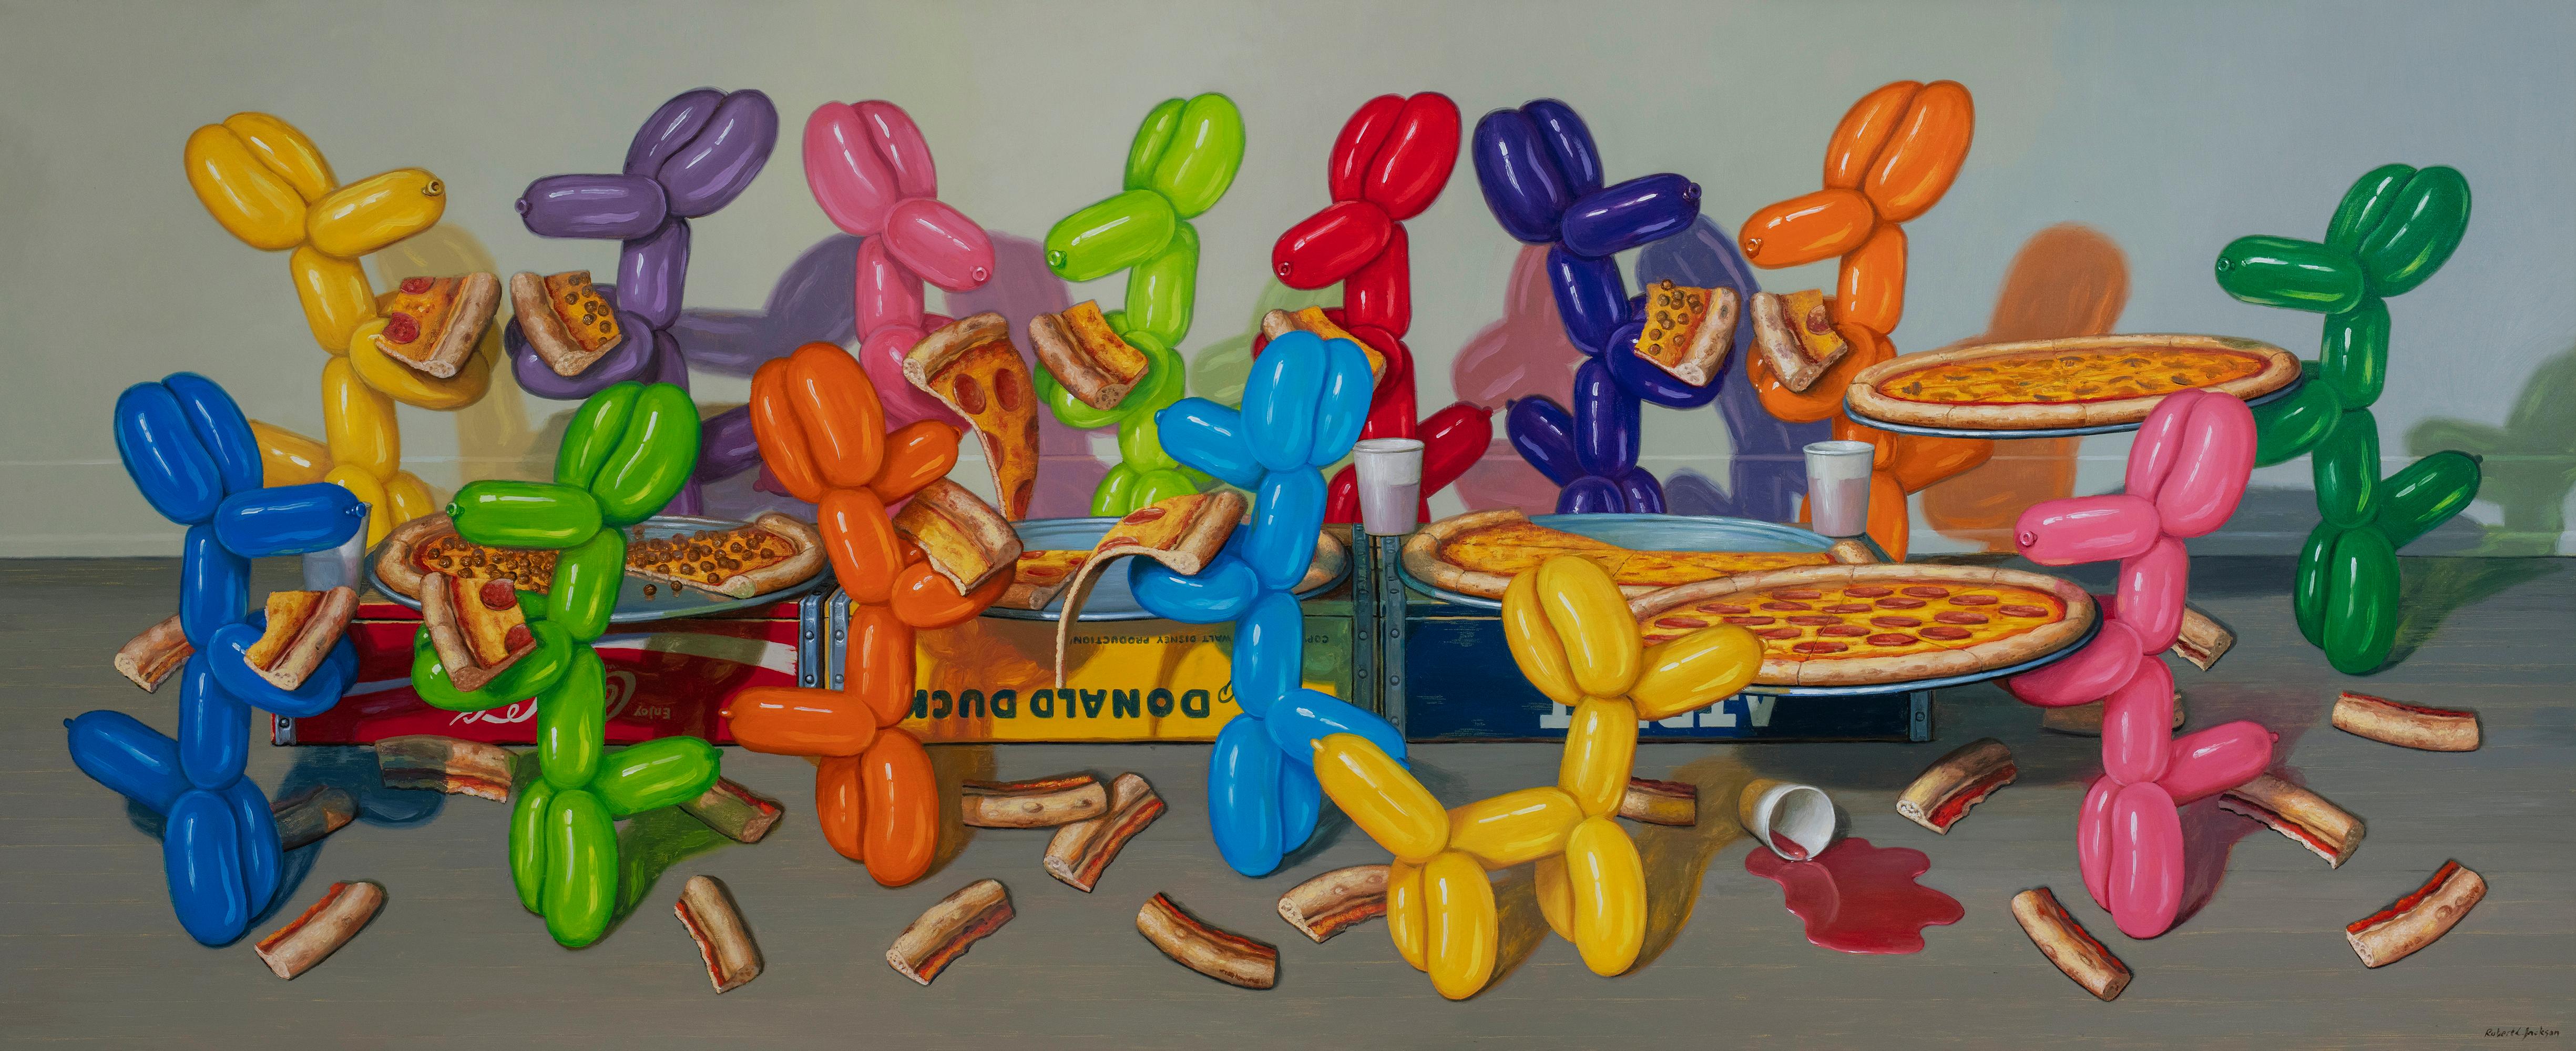 Robert Jackson Still-Life Painting - PIZZA FEAST - Contemporary Still Life / Pop Art / Dinner Party / Balloon Dogs